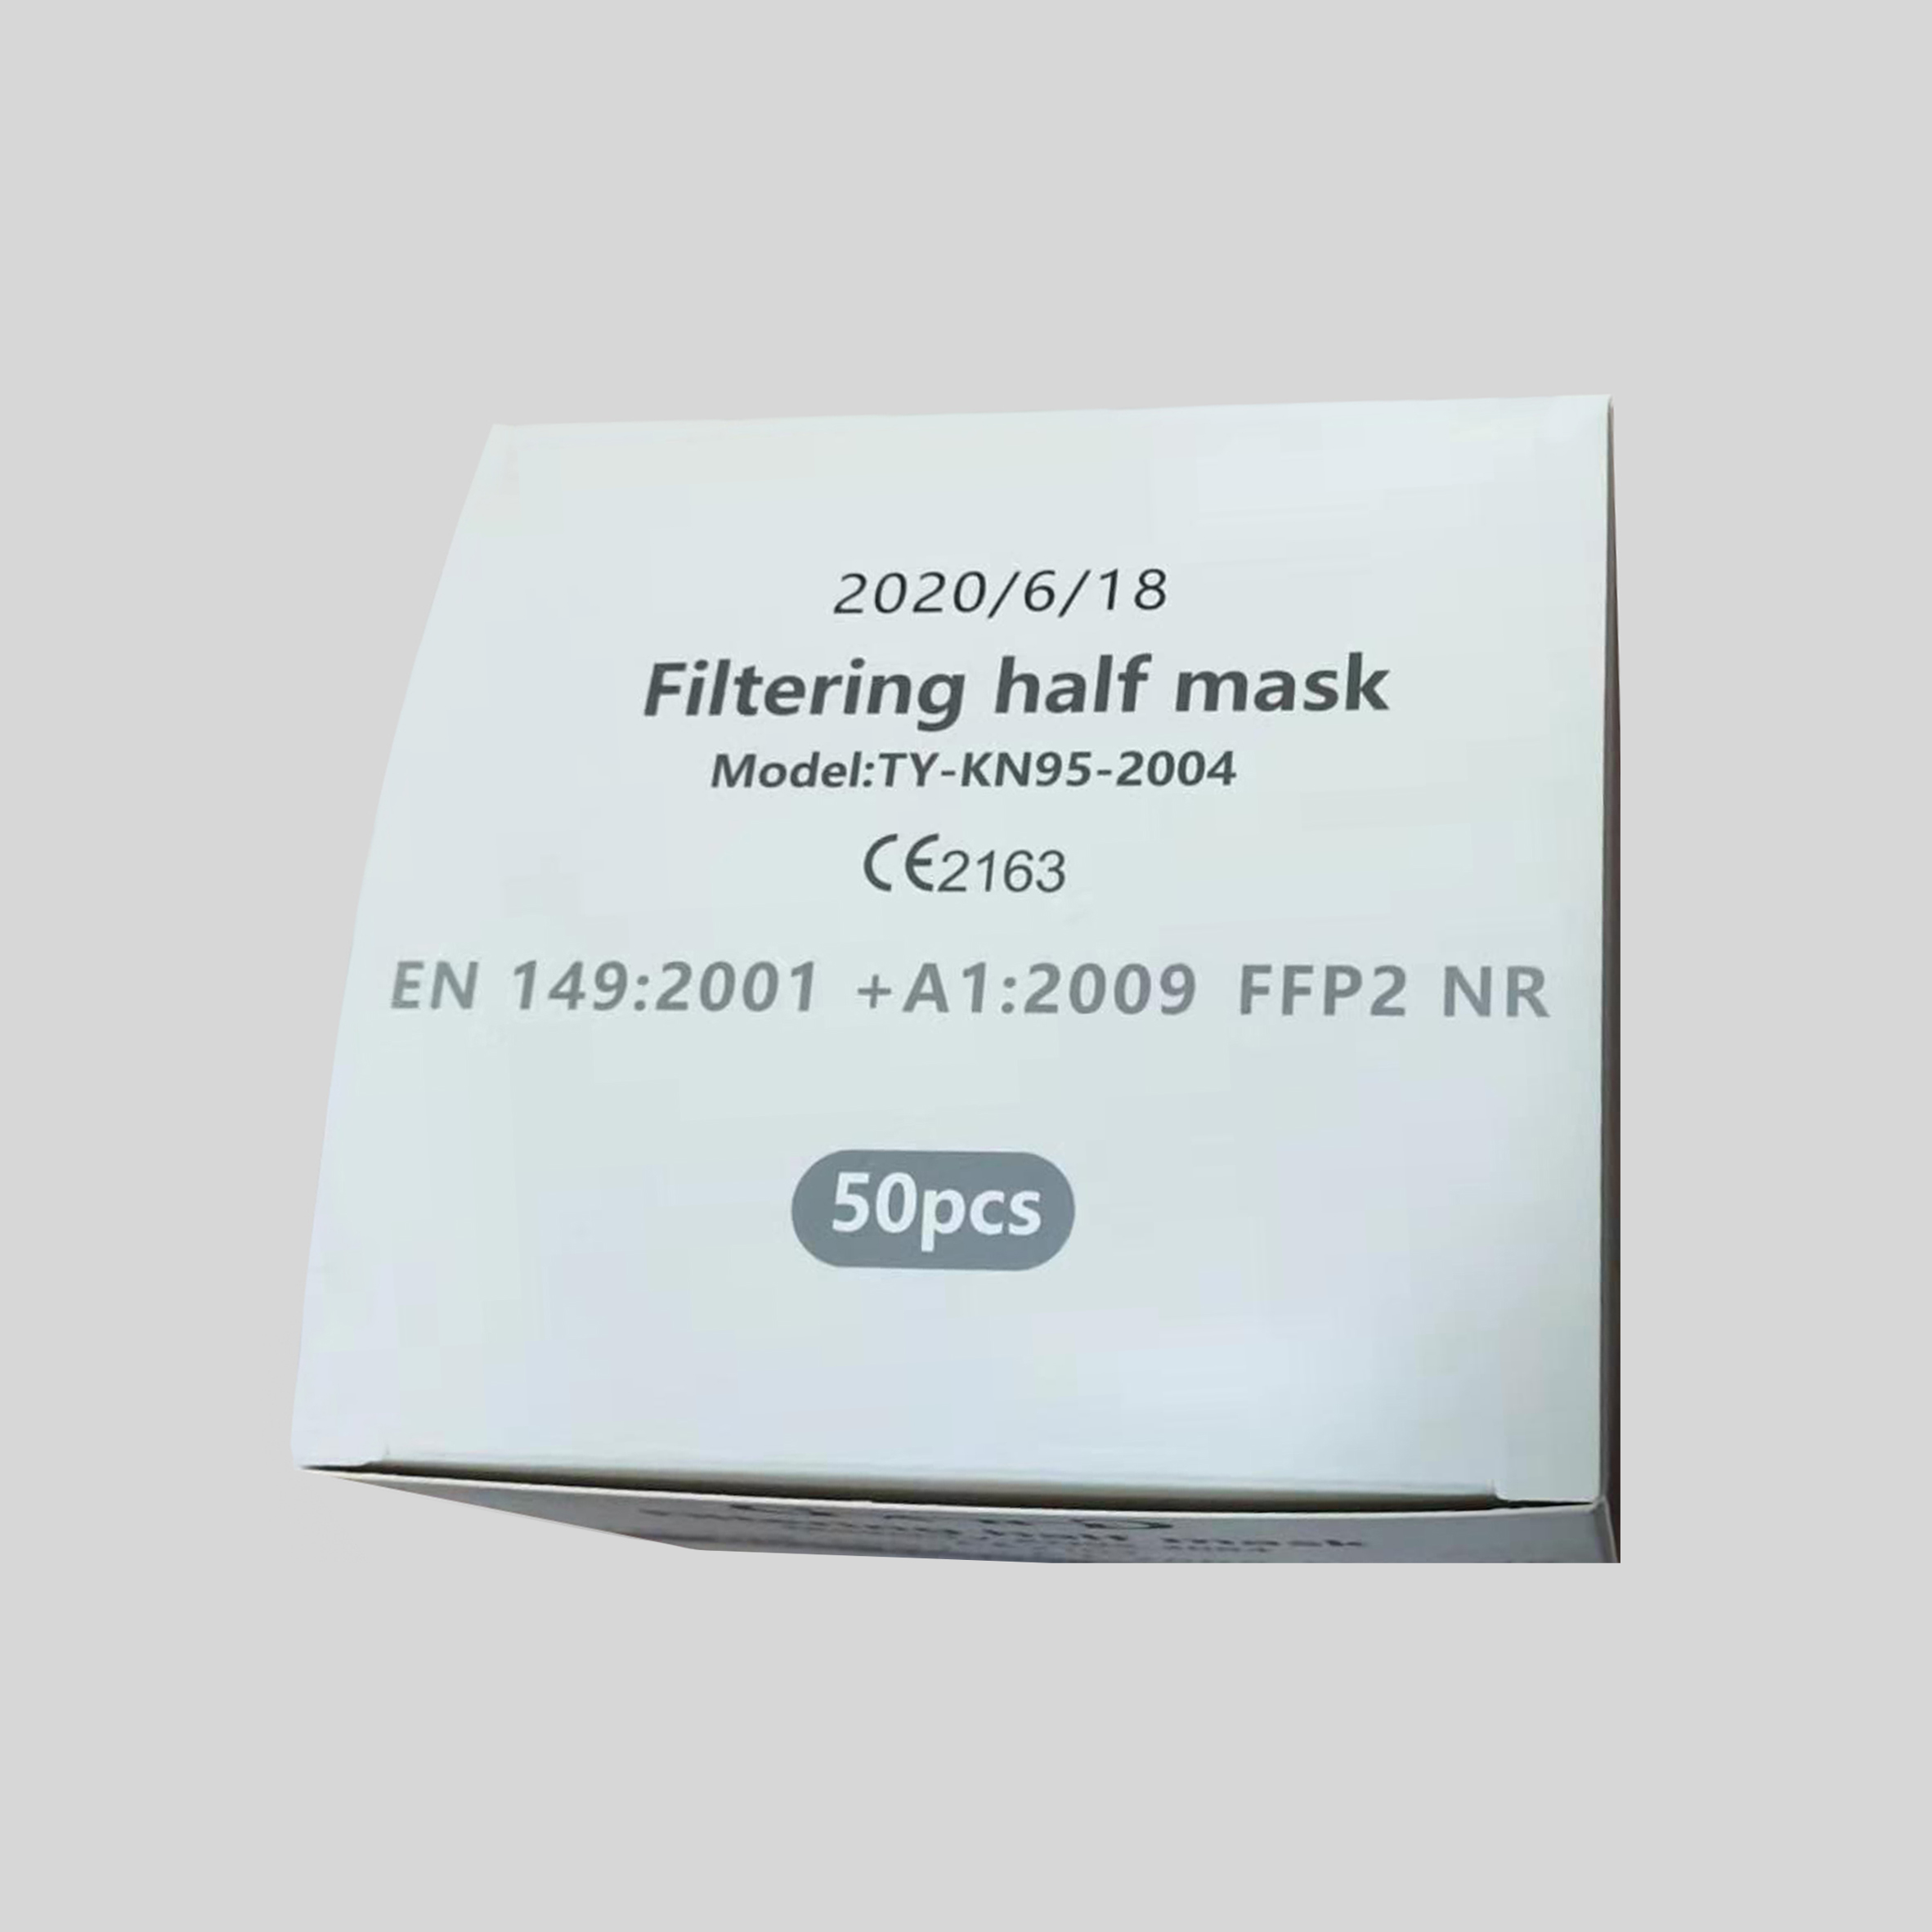 immagine packaging mascherina protettitva FFP2 GABG